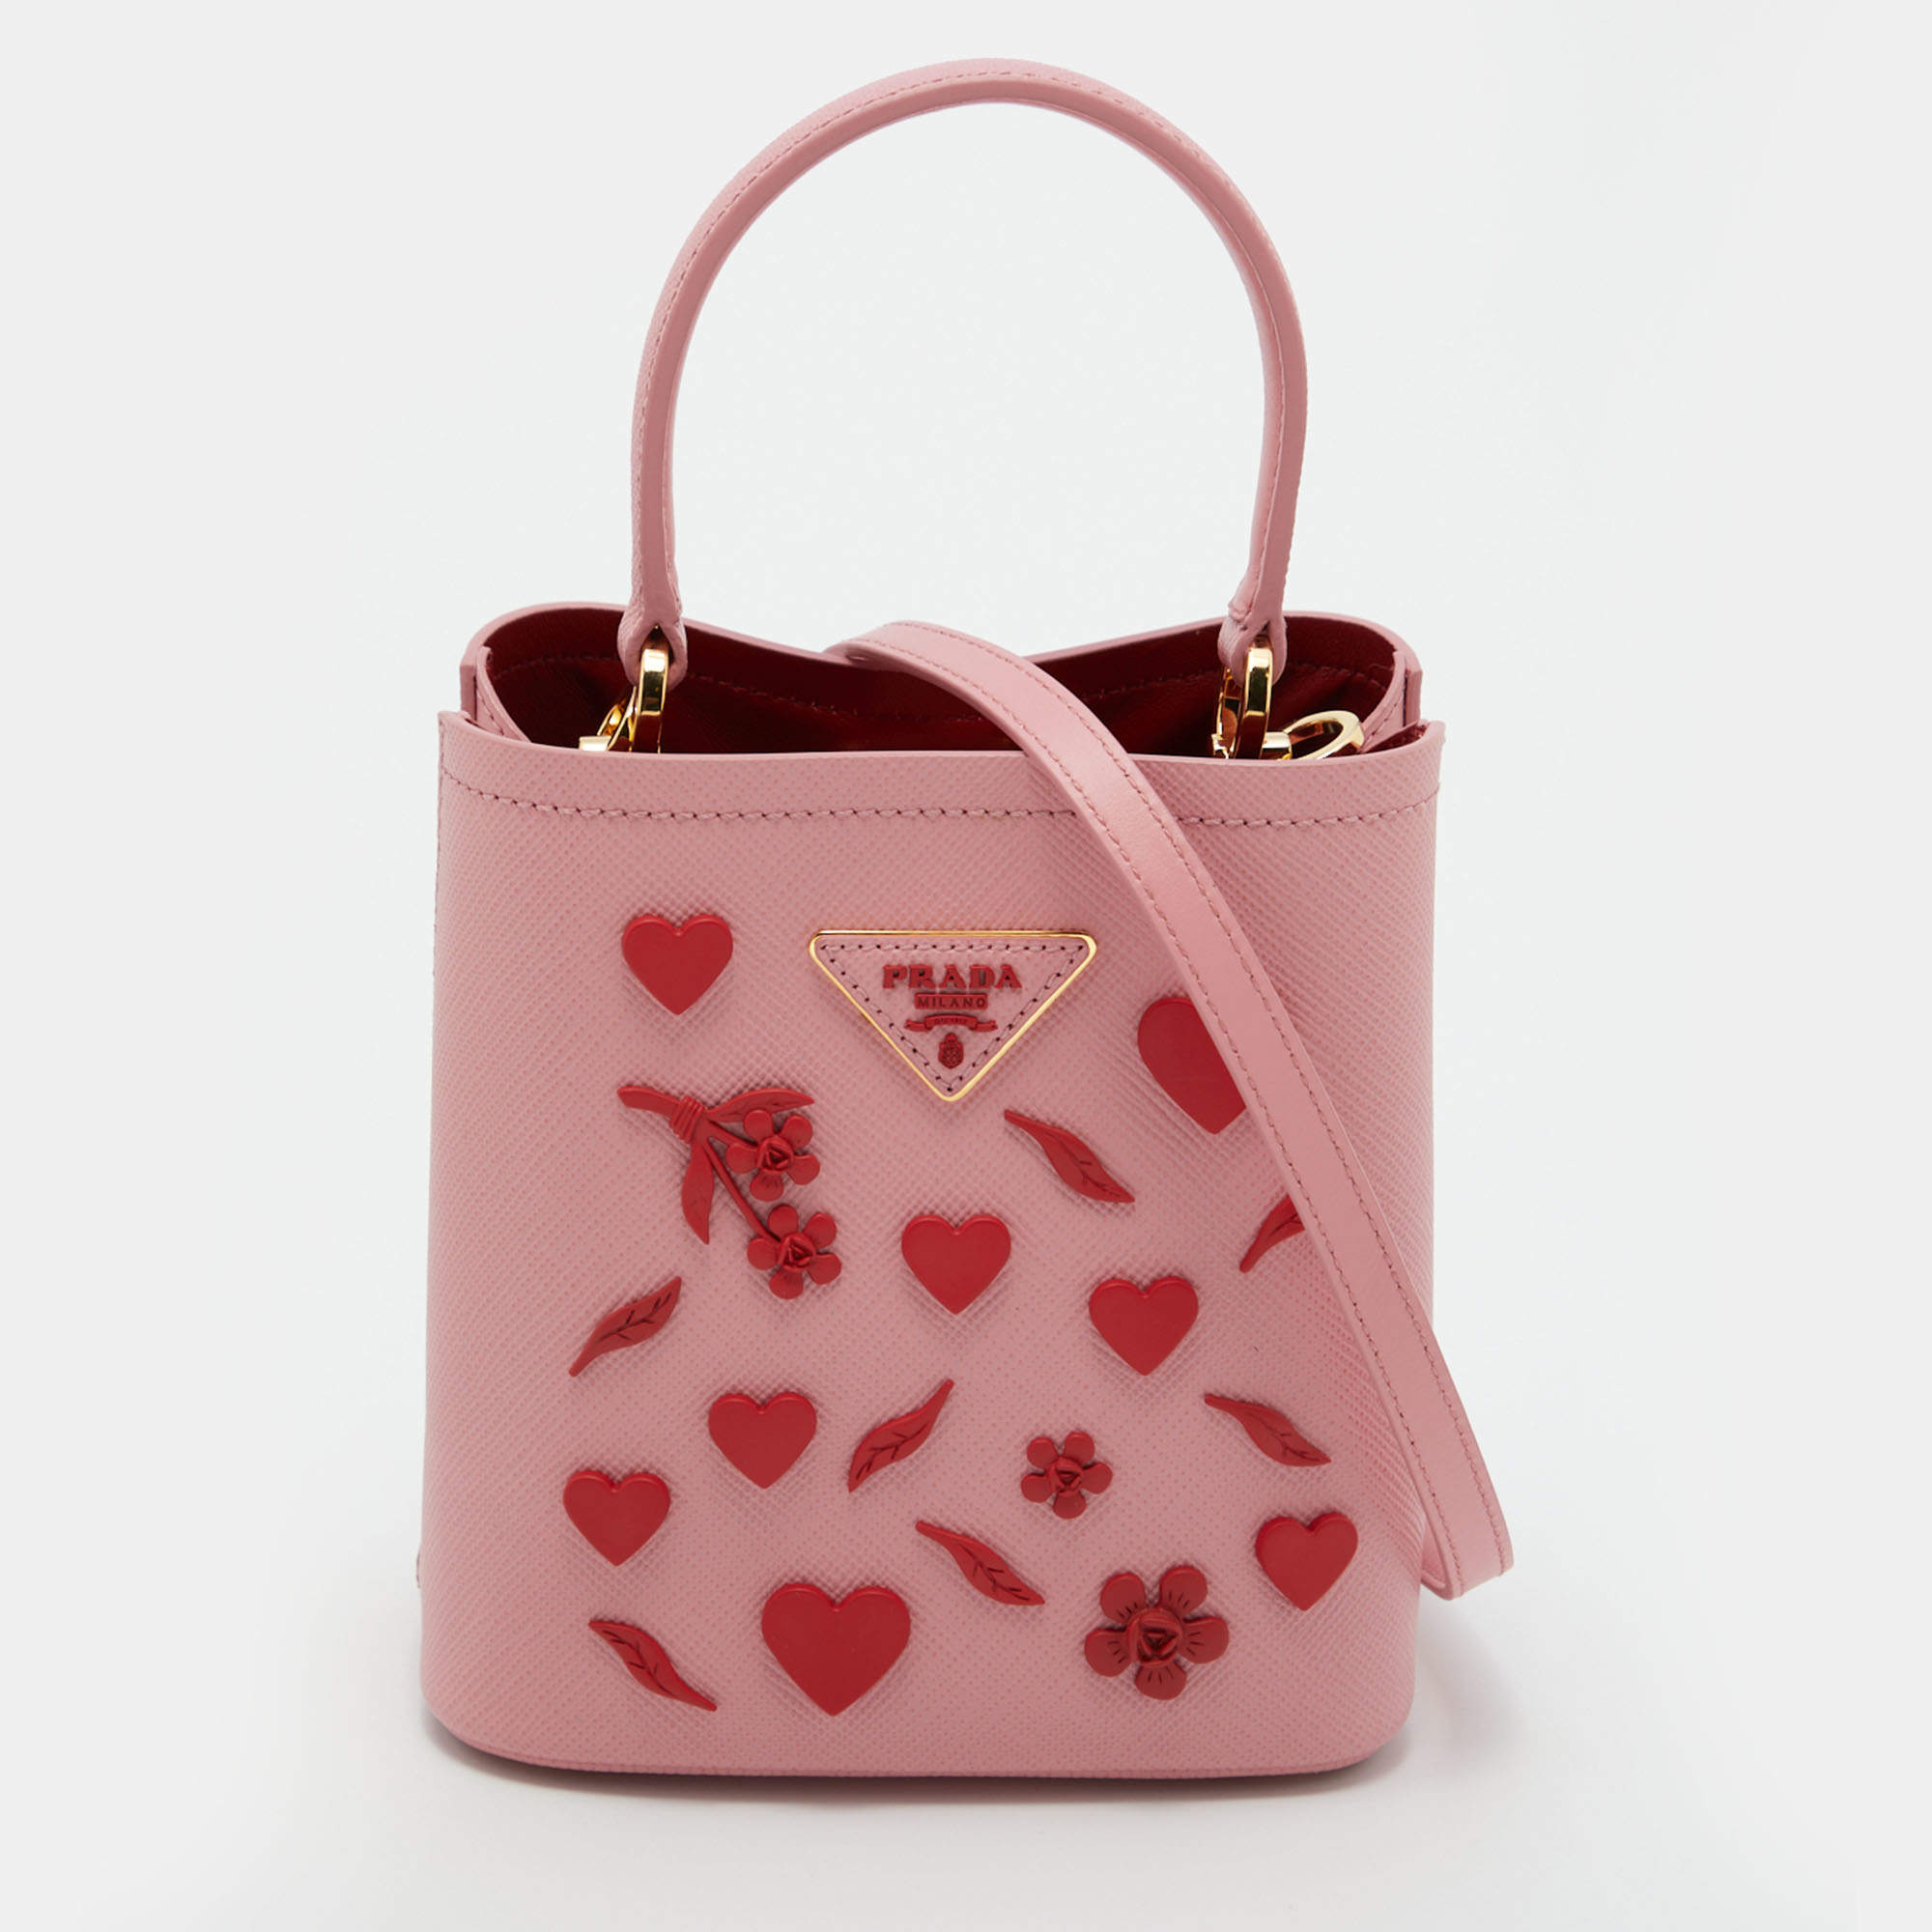 Prada Pink Saffiano Leather Small Embellished Panier Bag